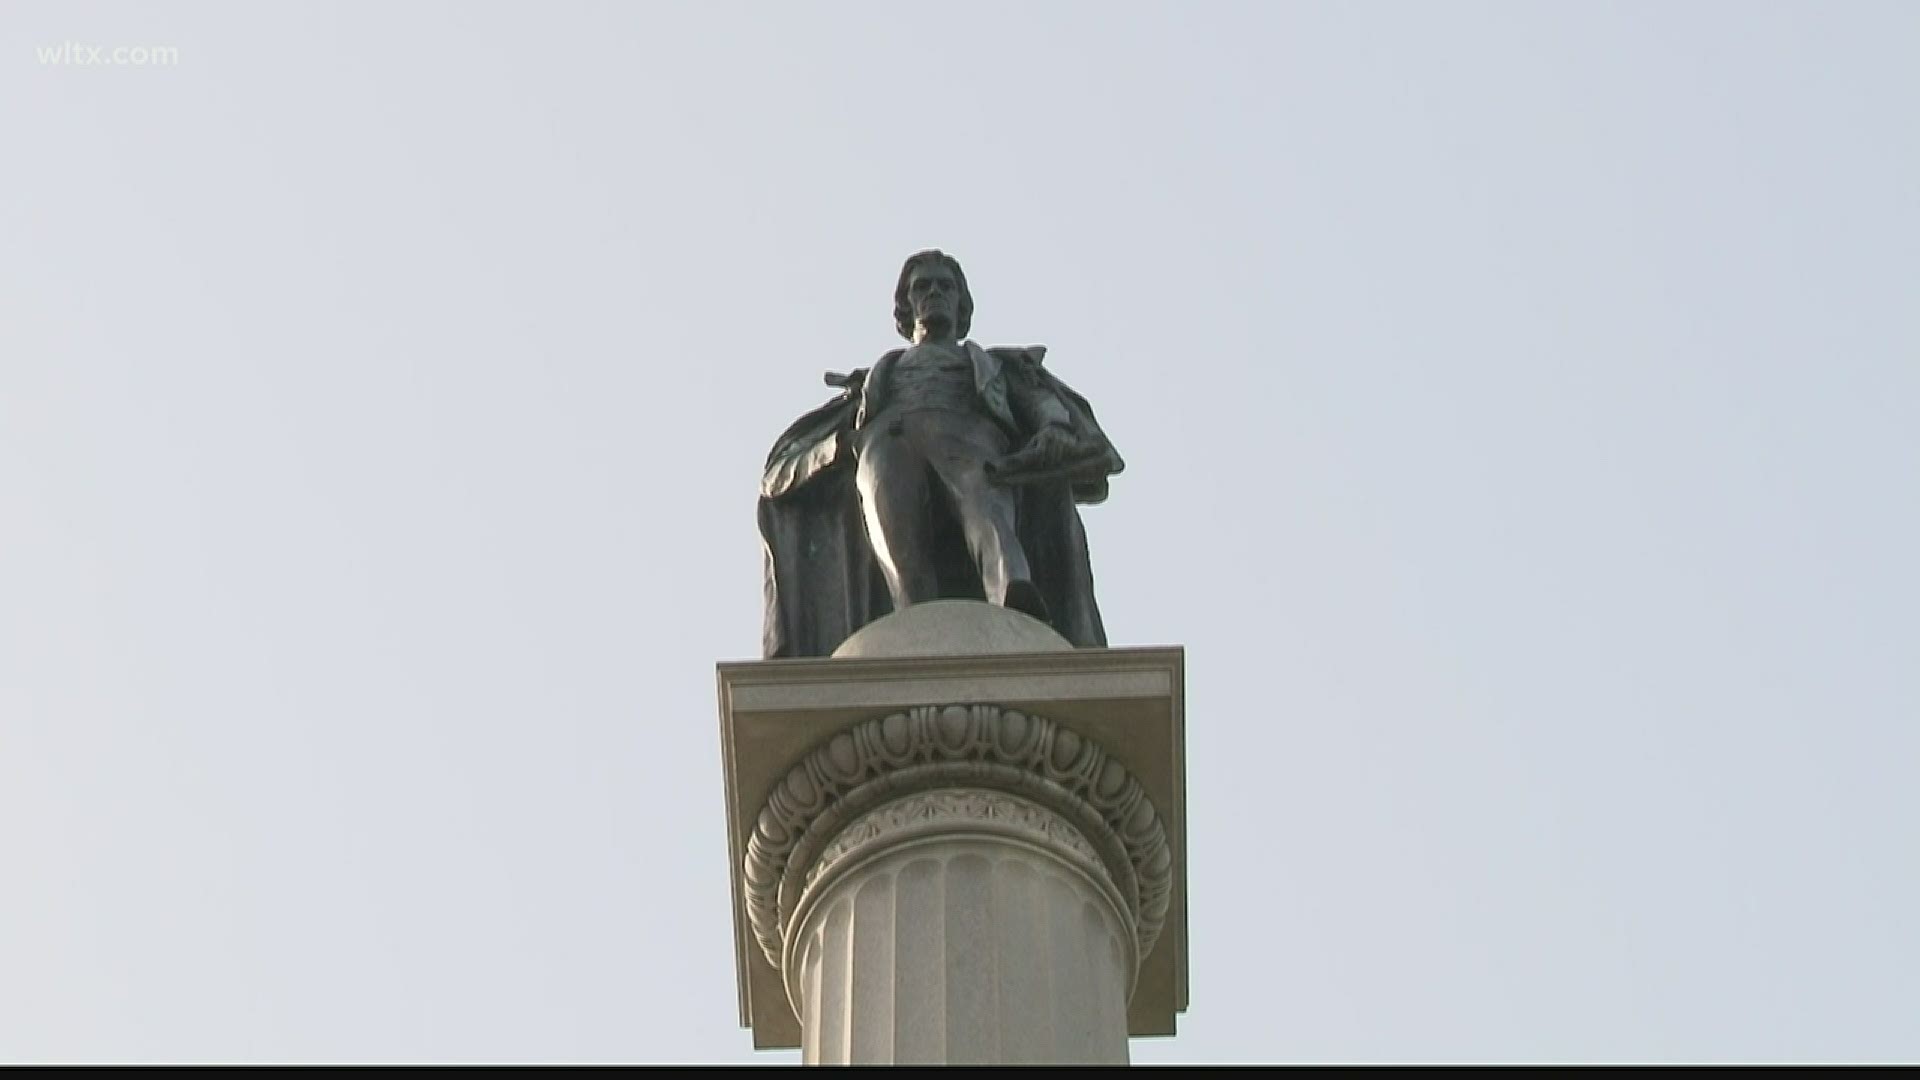 Charleston mayor John Teckelnburg announced plans to remove a statue of John C. Calhoun located downtown